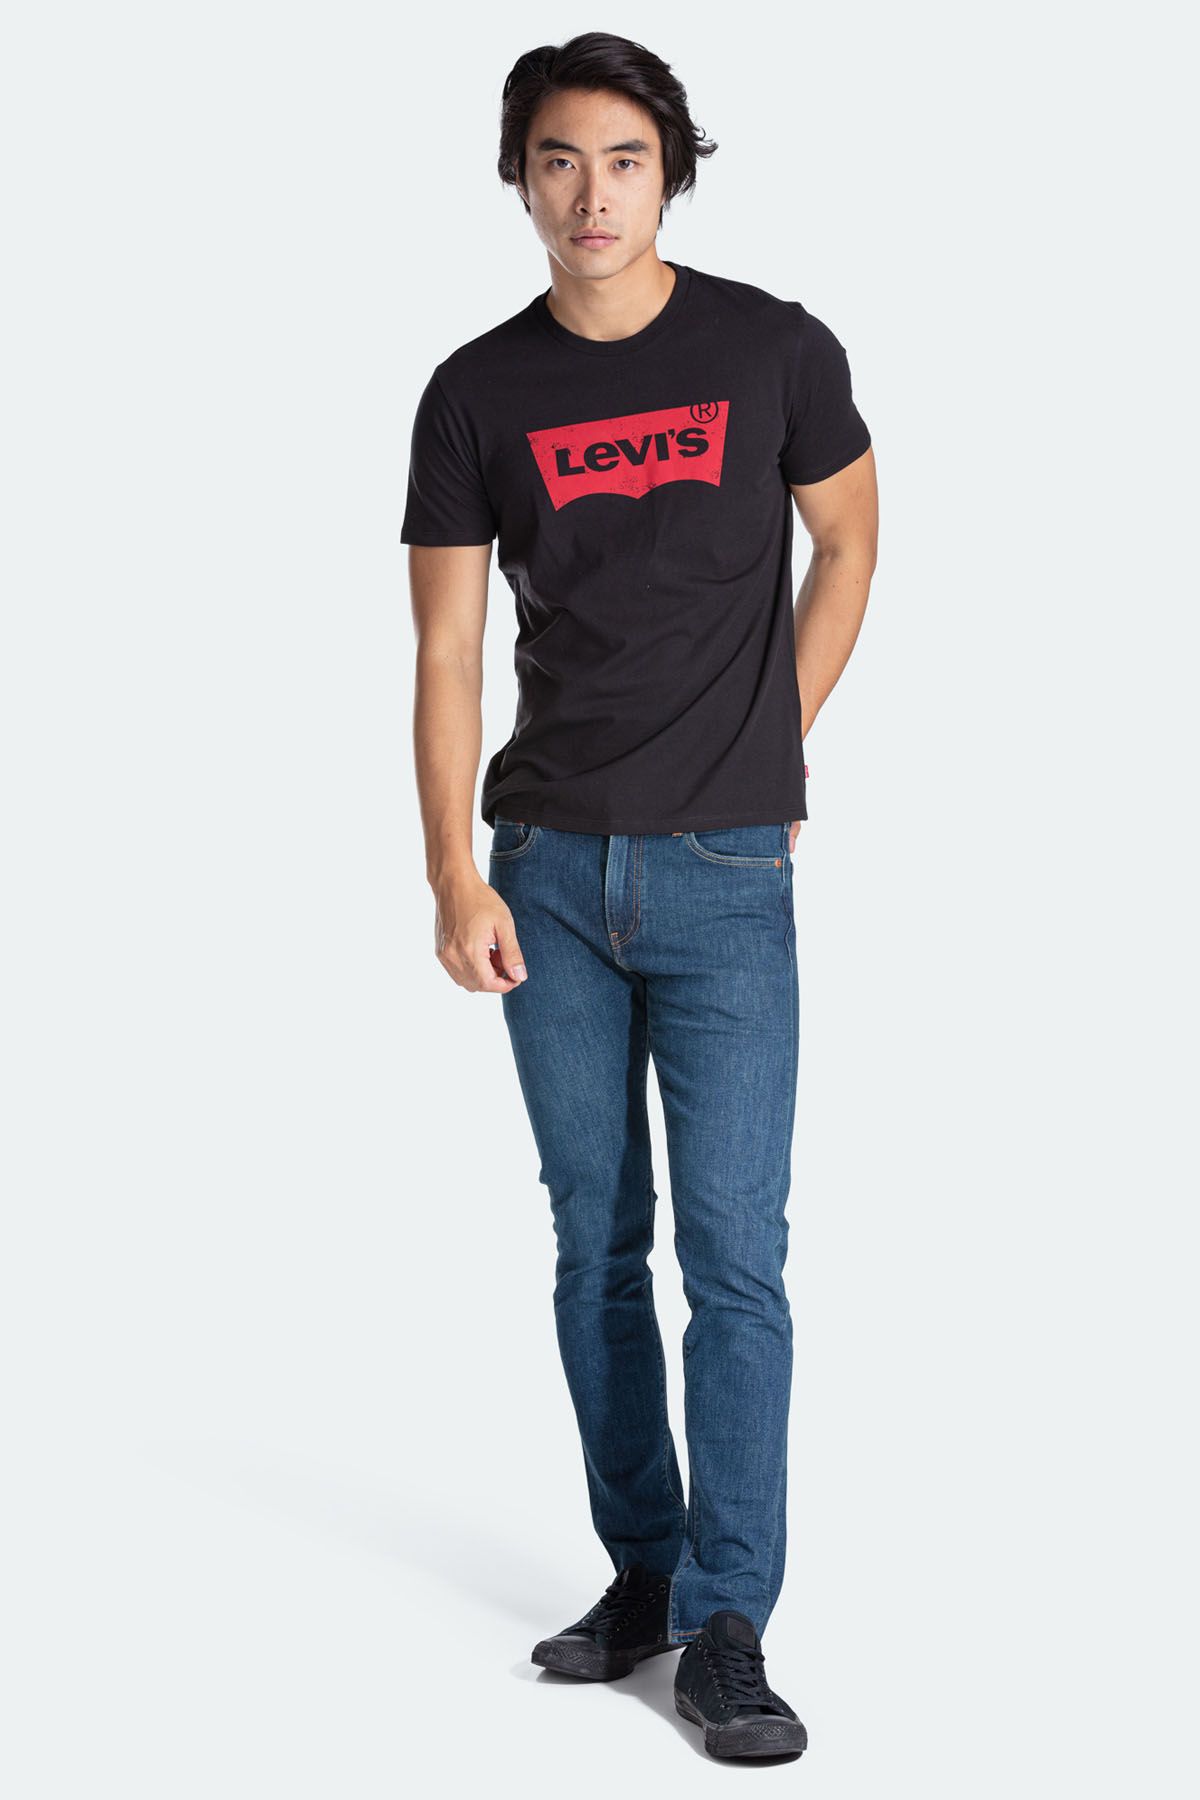 Levi's Â® Graphic Tee Black Men T-Shirts|akgalleria.com